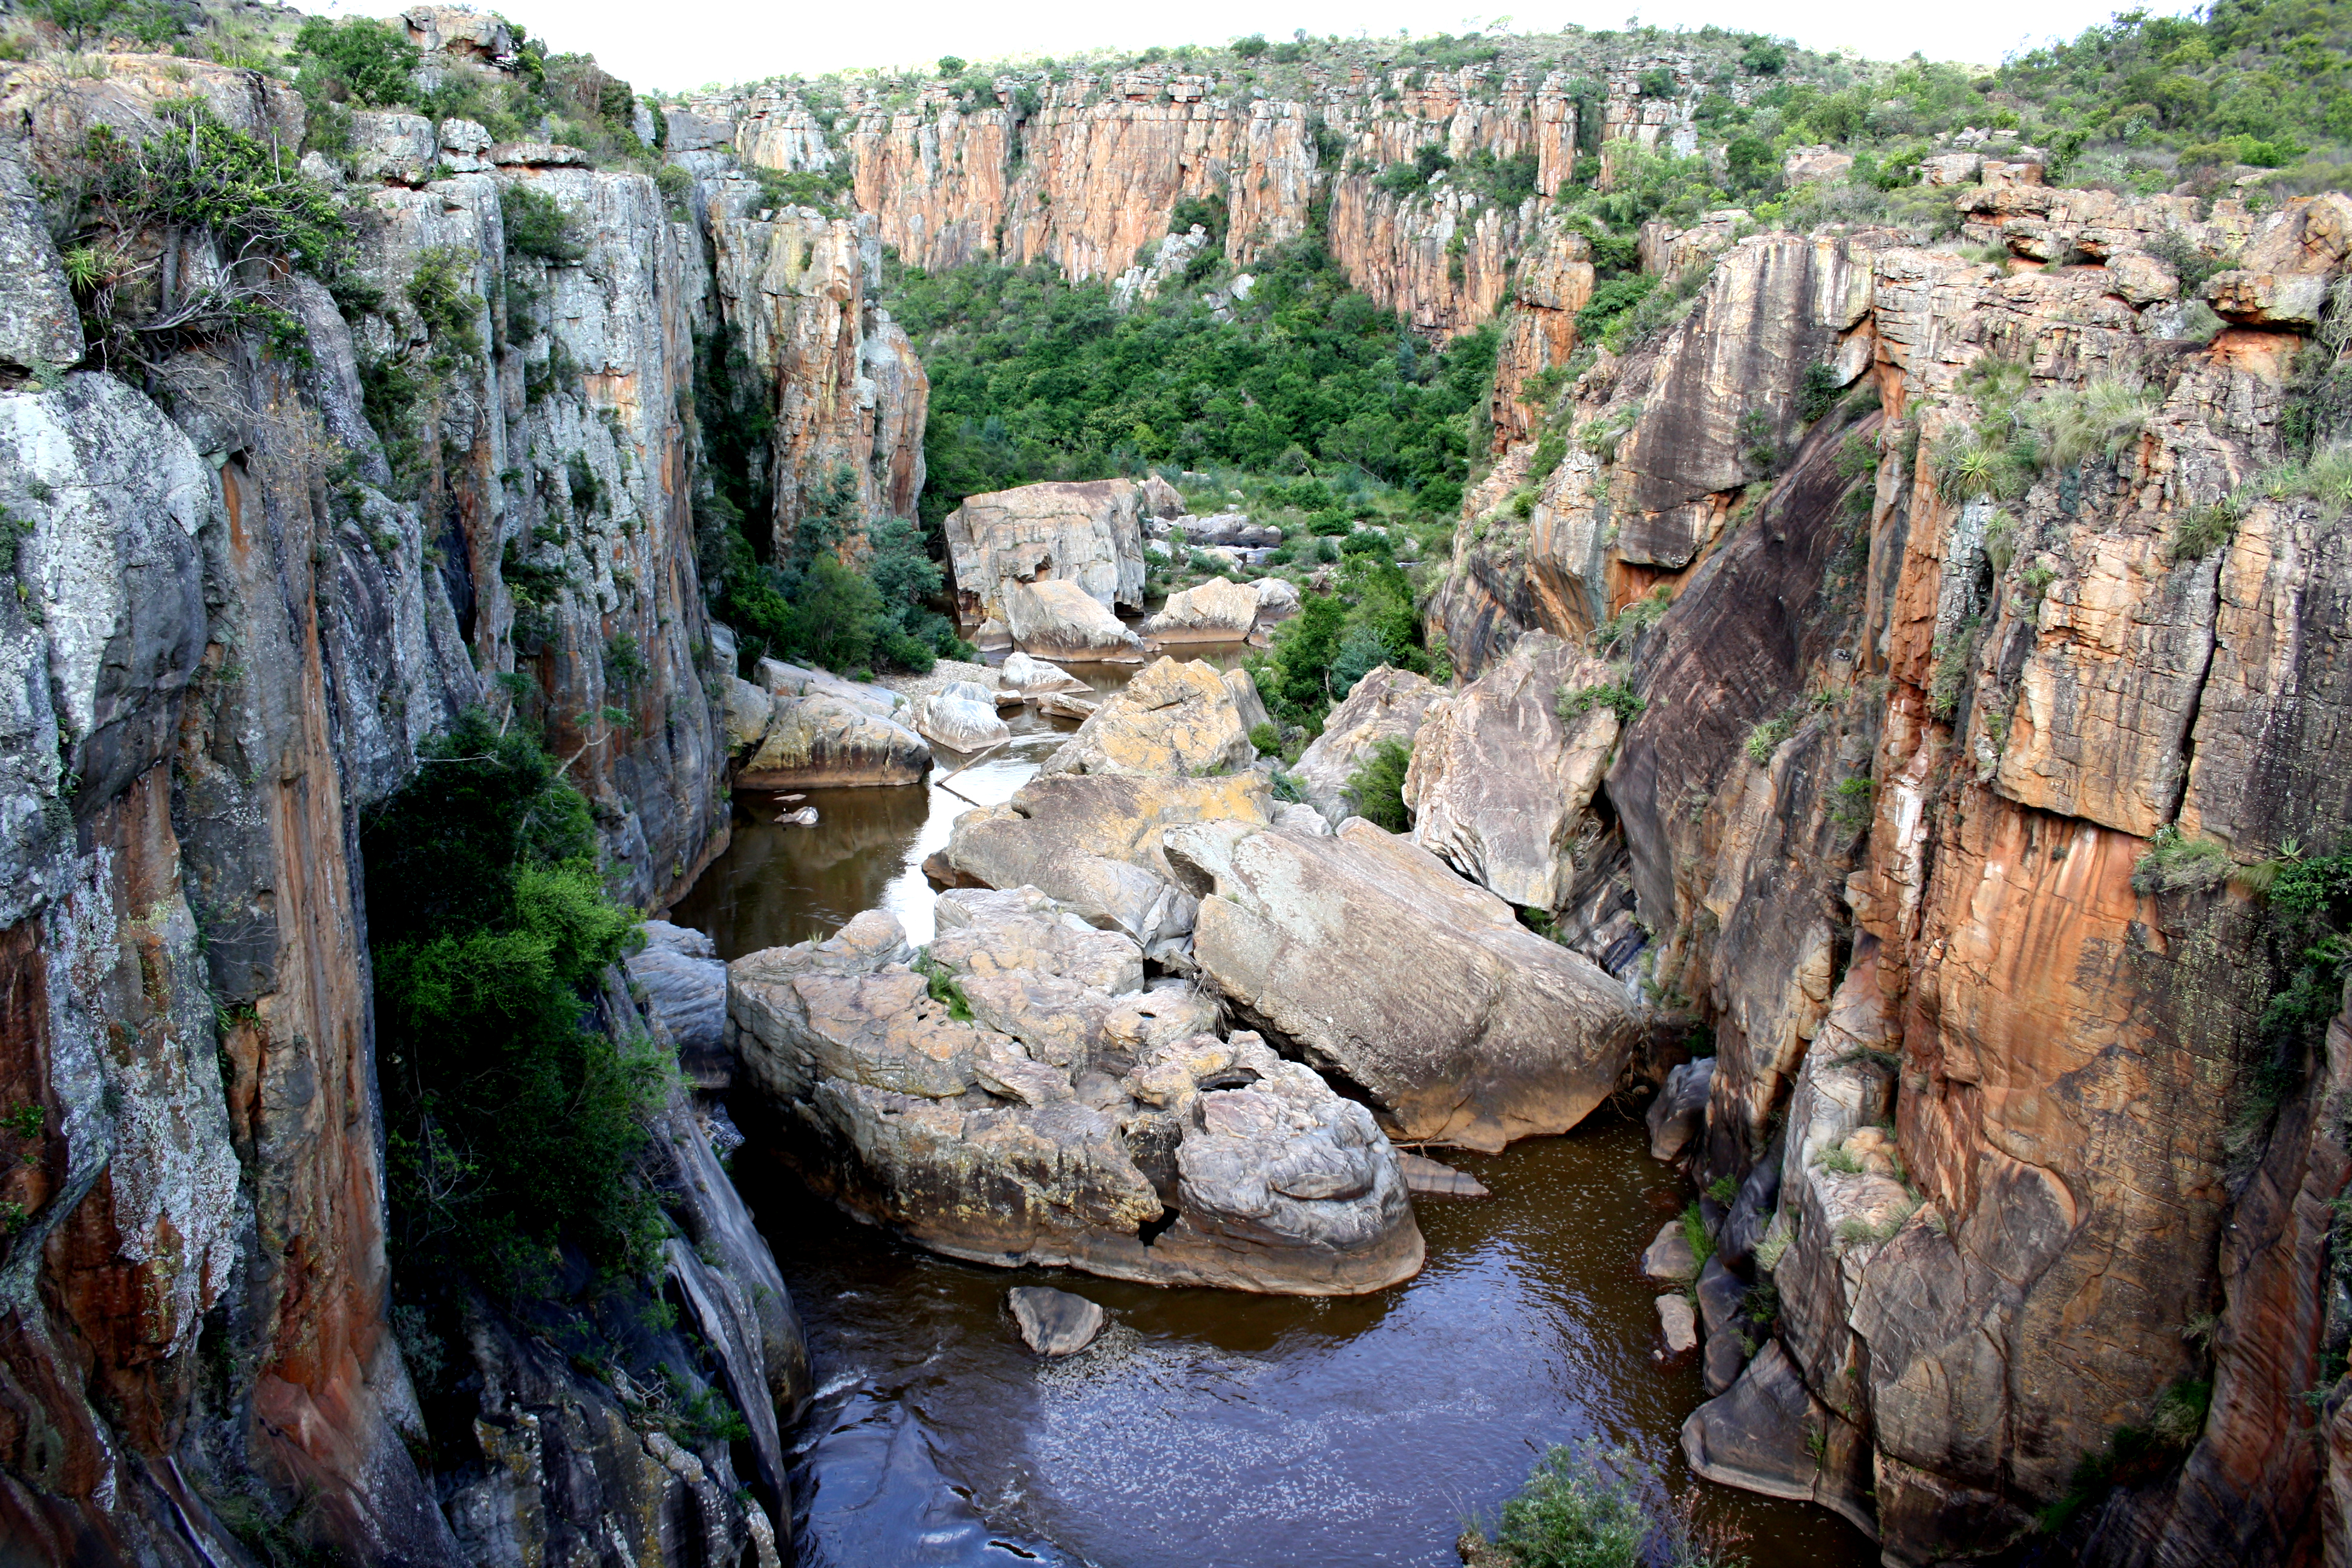 File:Bourke's Luck Potholes, Blyde Canyon Nature Reserve, Mpumalanga, South Africa.jpeg - Wikipedia